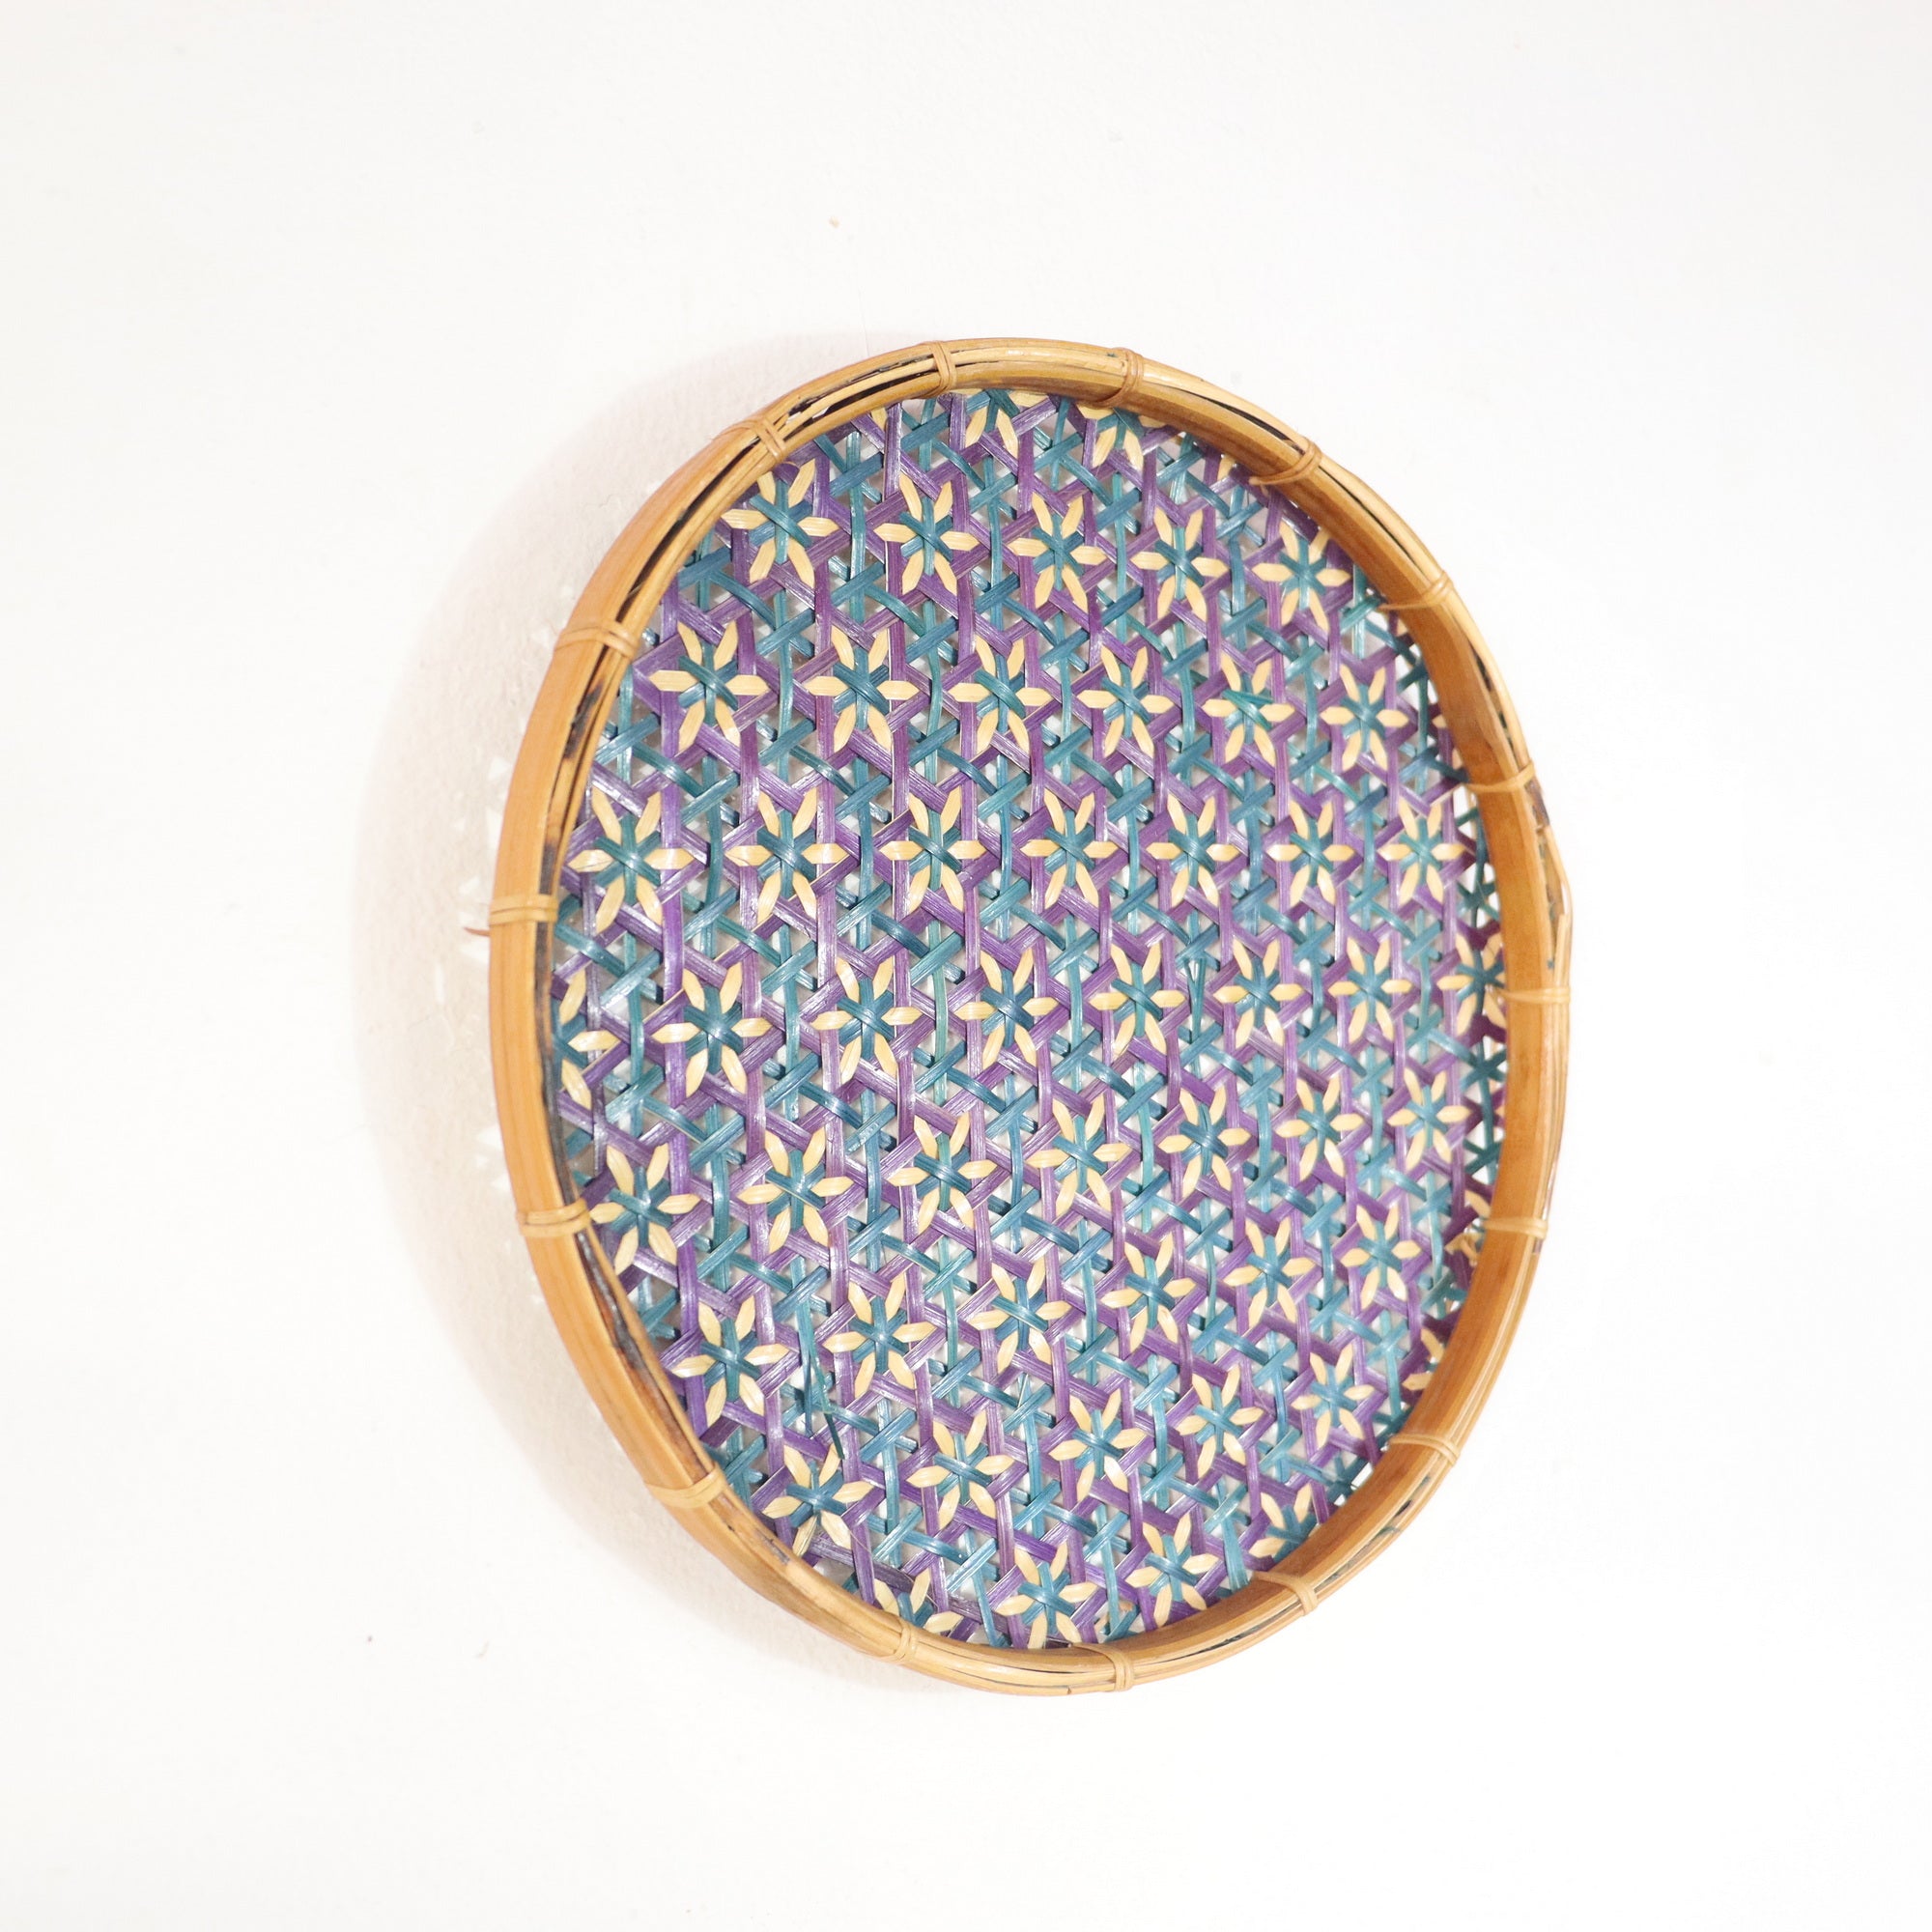 THI TI NAN - DIY Wall Art Basket Decor 10 inches